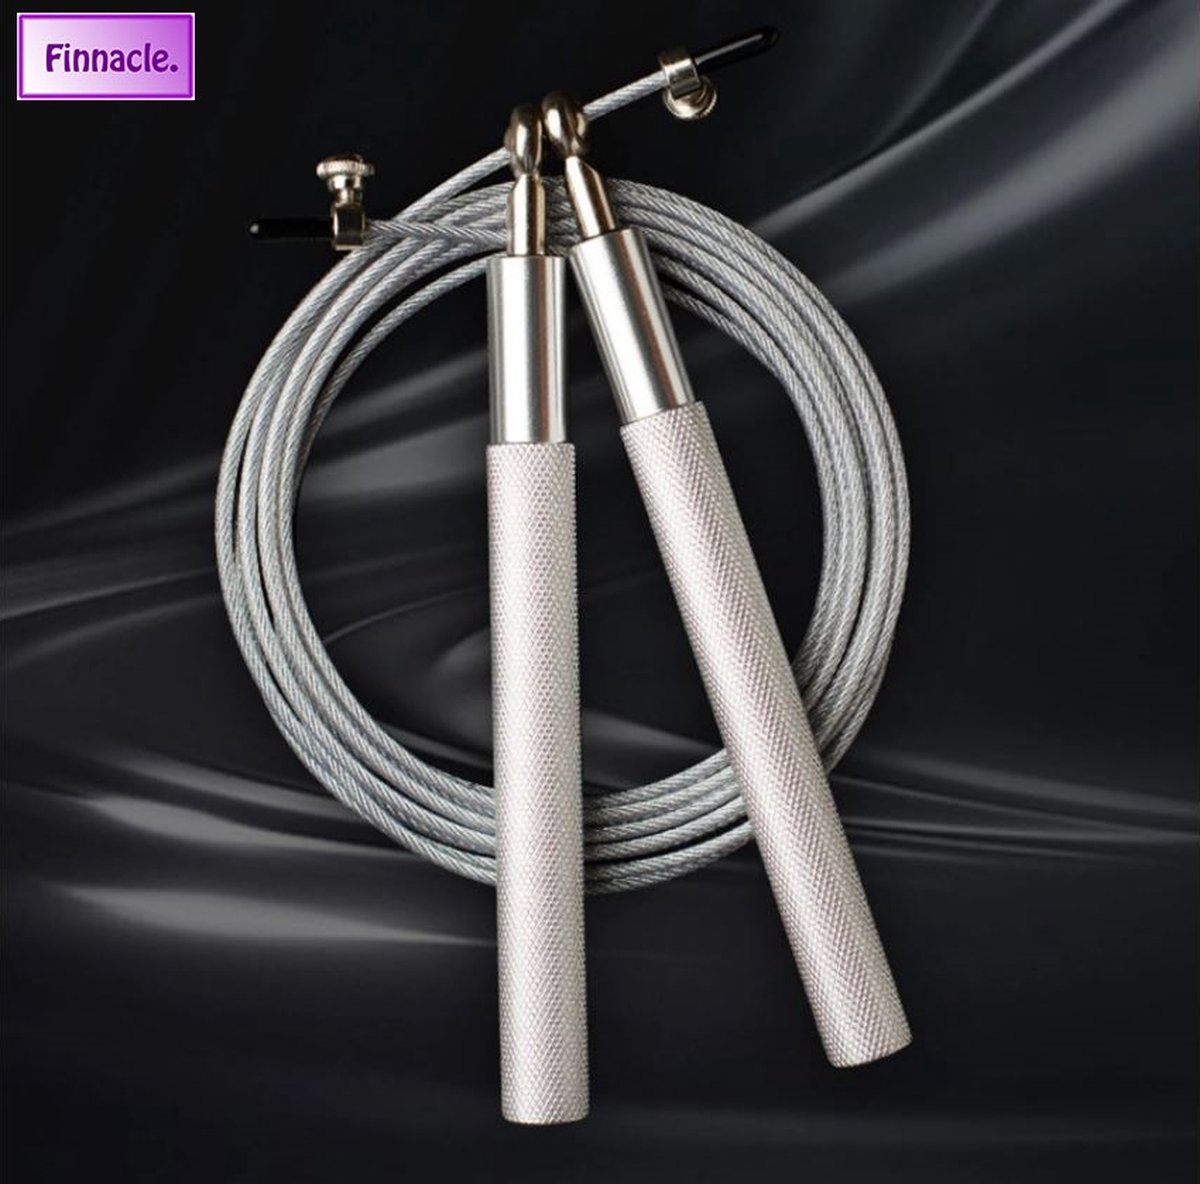 Finnacle - Springtouw - Jump rope - Crossfit - Hoge Snelheid - Duurzaam Staal Slijtvast ontwerp - Zilver